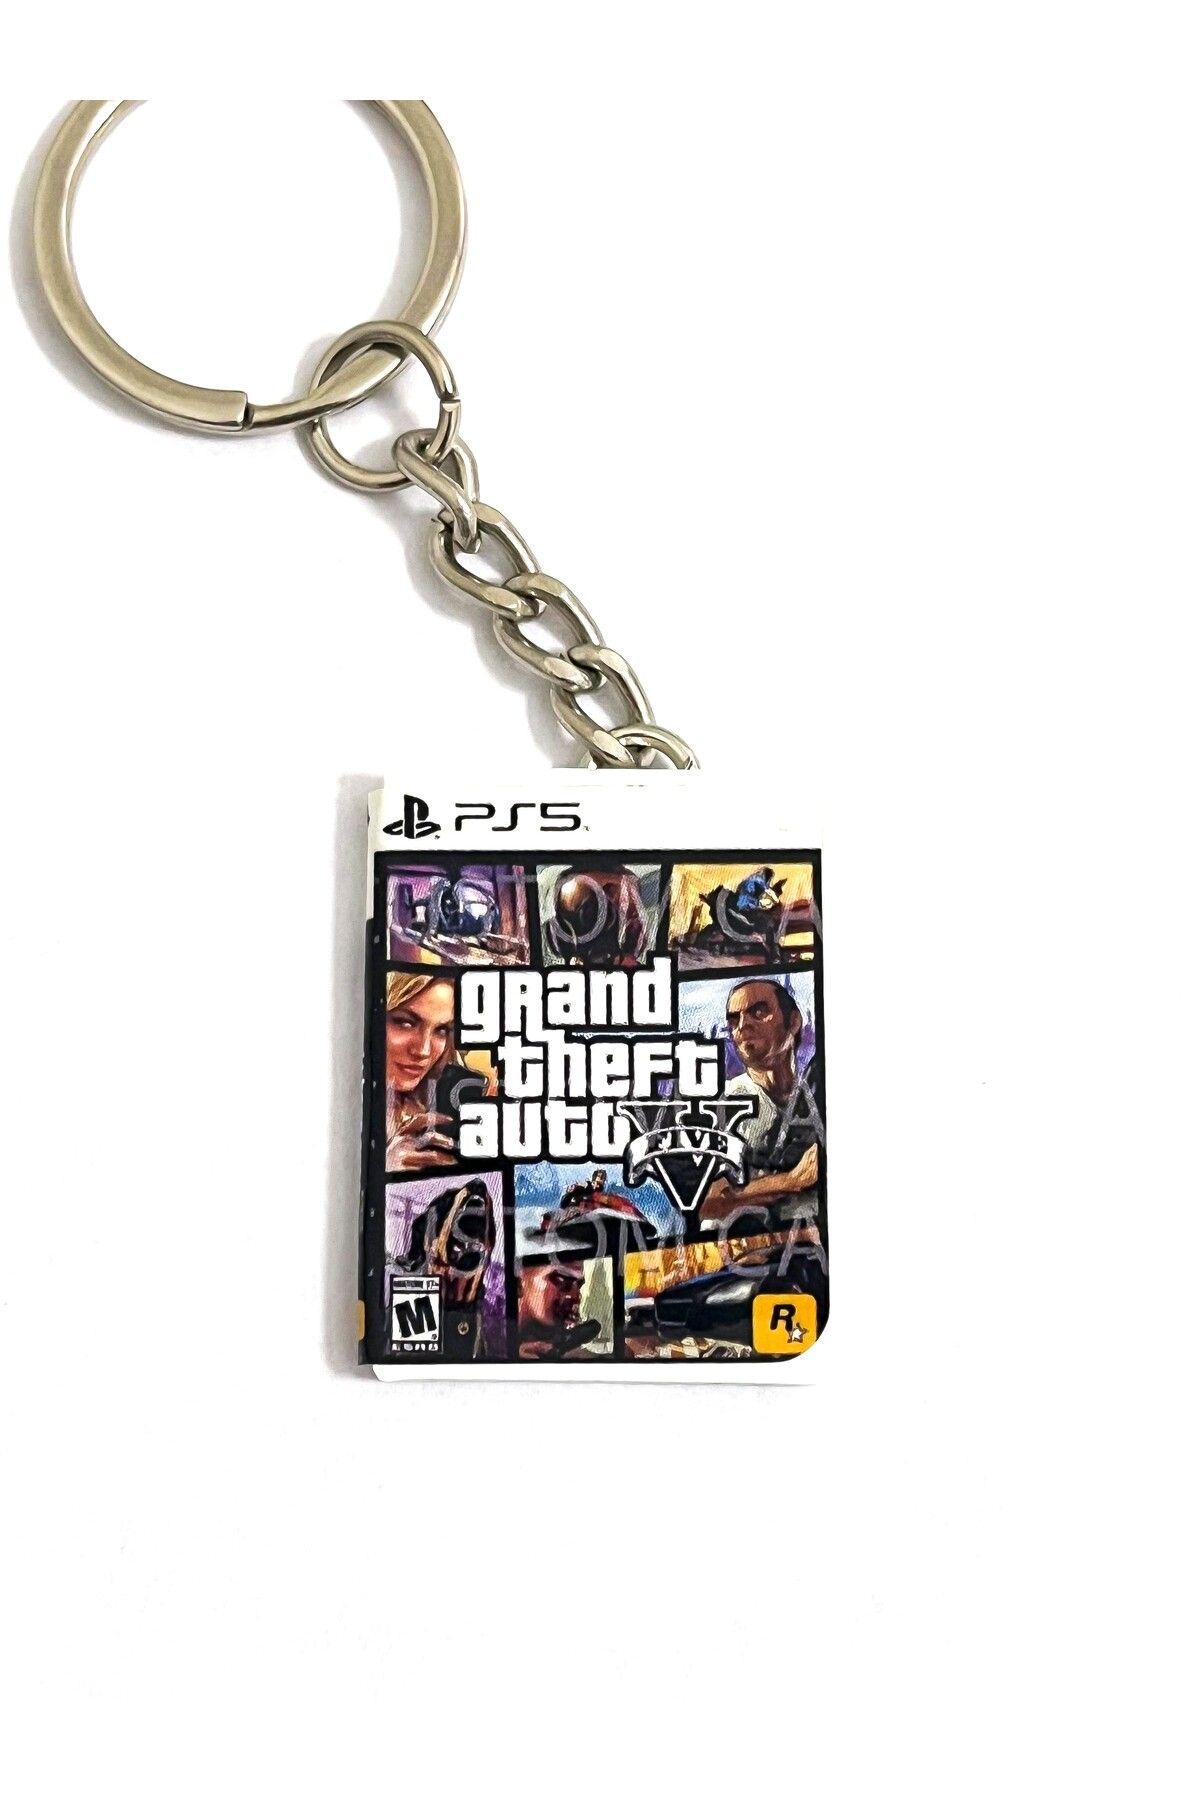 Cosmic Star Gta 5 Grand Theft Auto V Minyatür Ps5 Oyun Kutusu Anahtarlık